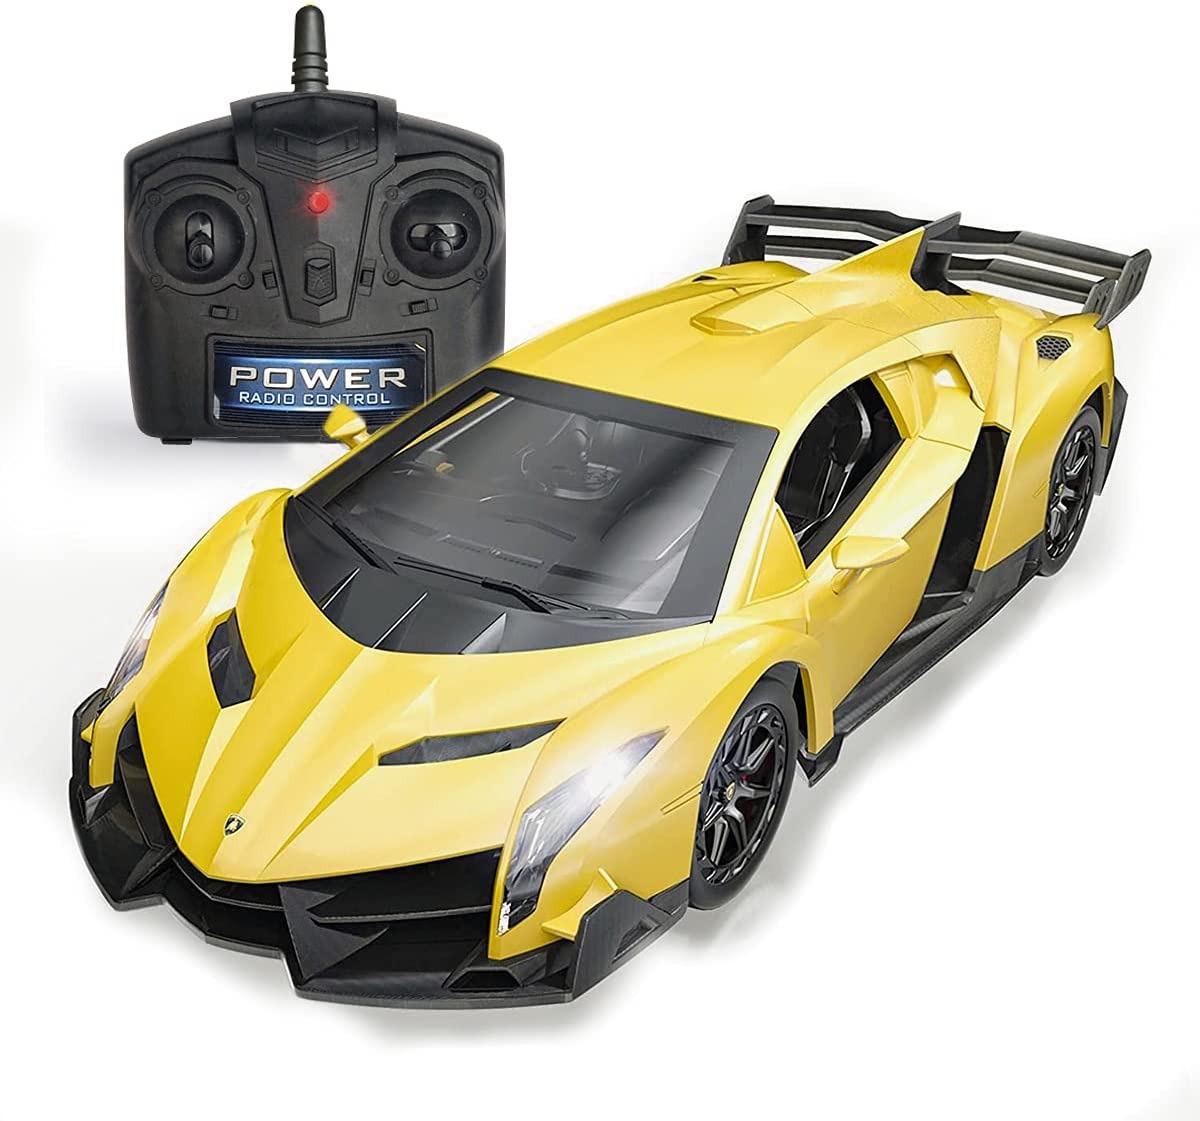 Lamborghini Remote Control Car Under 500: Lamborghini RC Car Pros and Cons